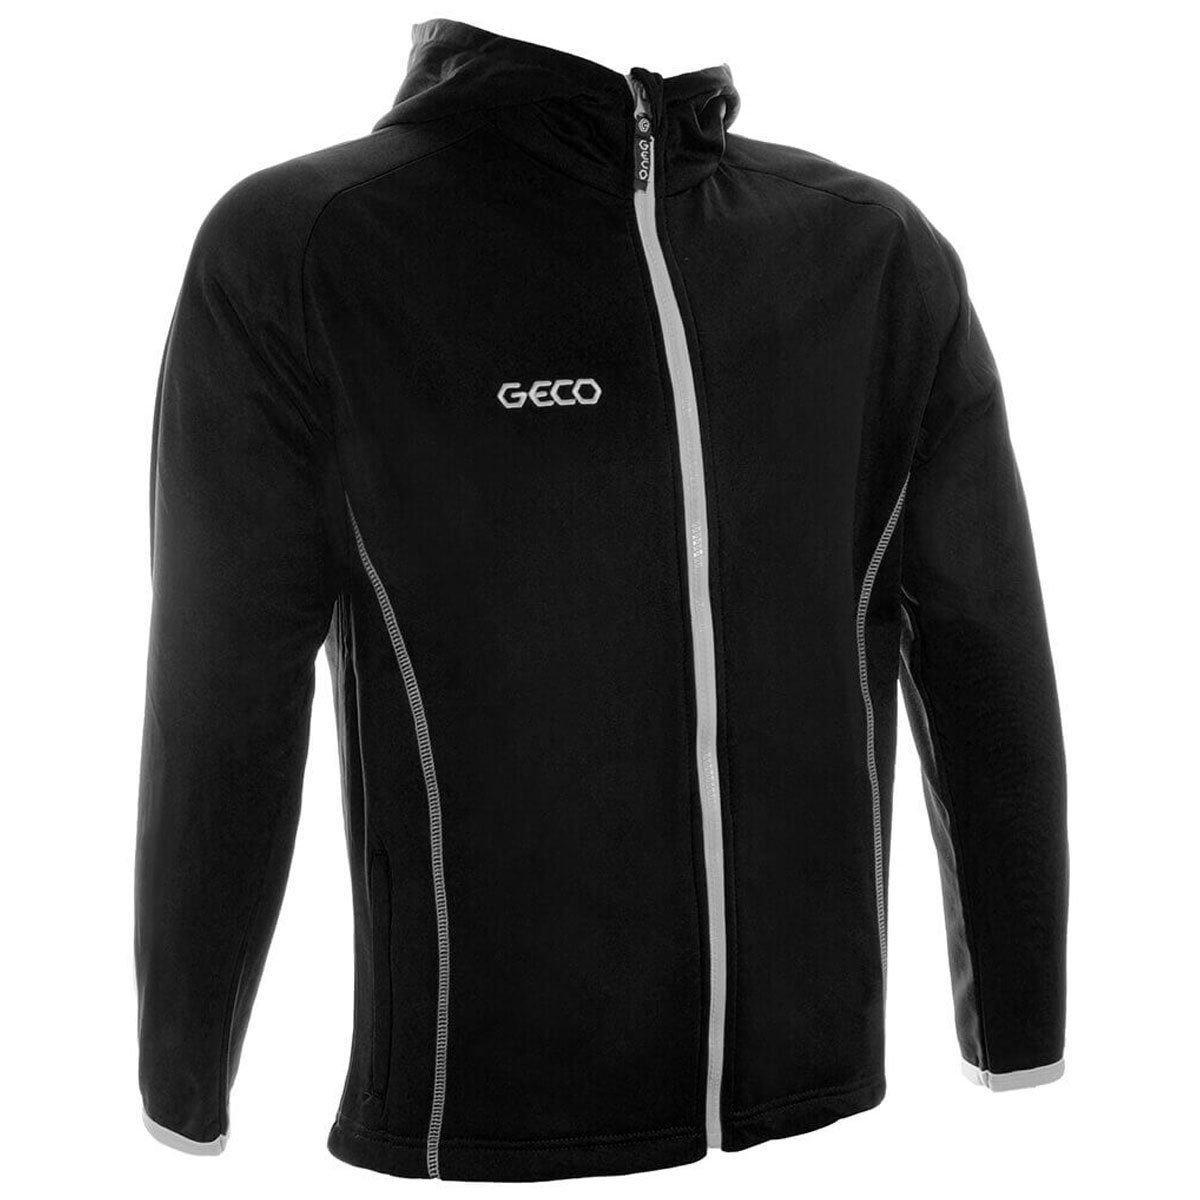 Präsentationsjacke mit Fußball Hurrican Trainingsjacke Kapuze Trainingsjacke schwarz Geco Geco Sportswear